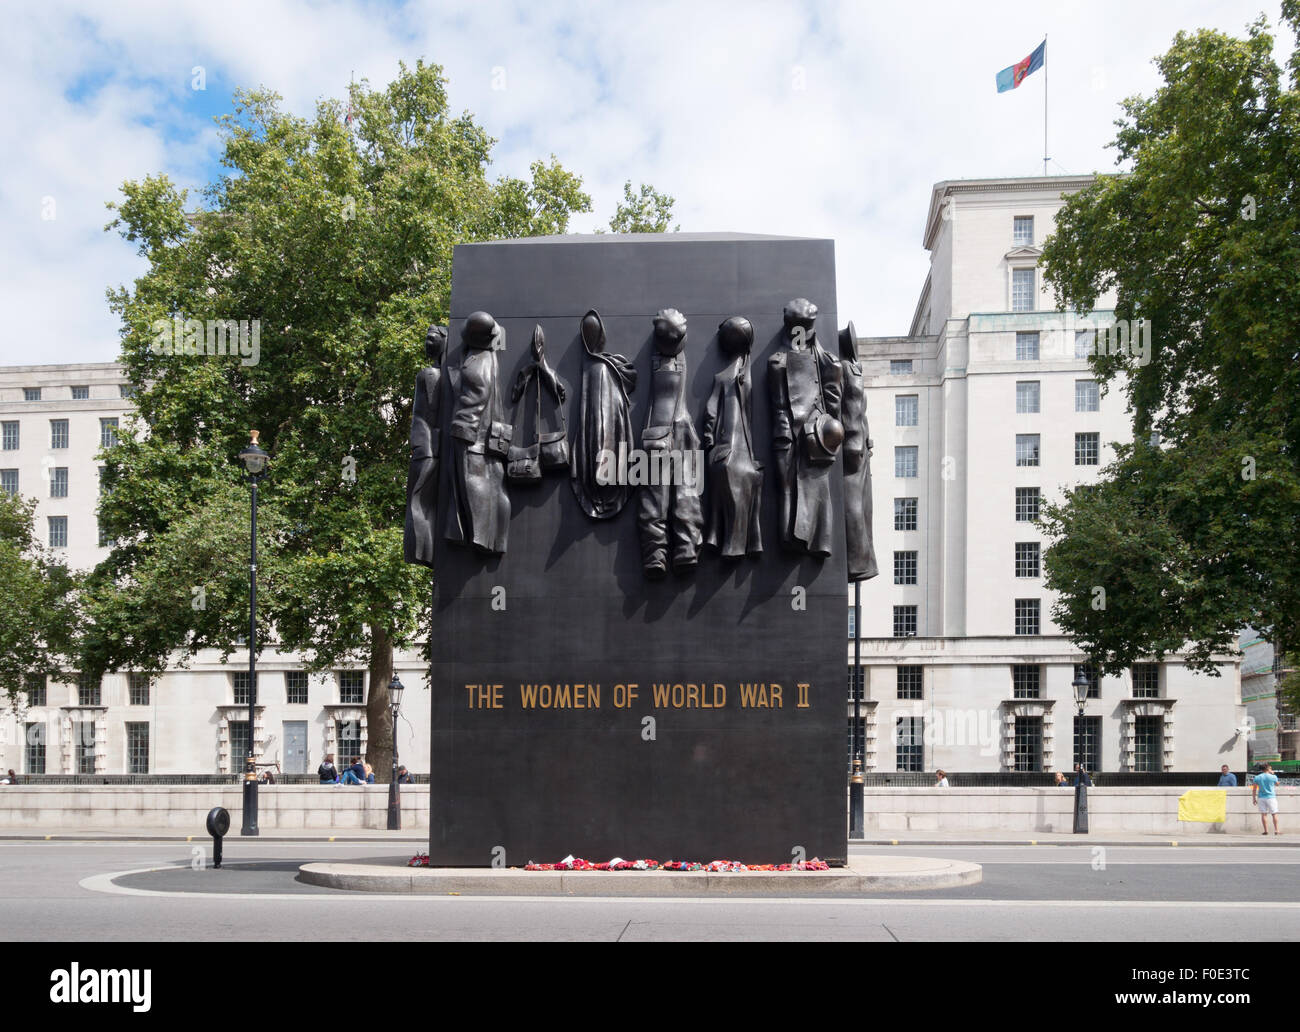 The Women of World War II war memorial, Whitehall, London England UK Stock Photo